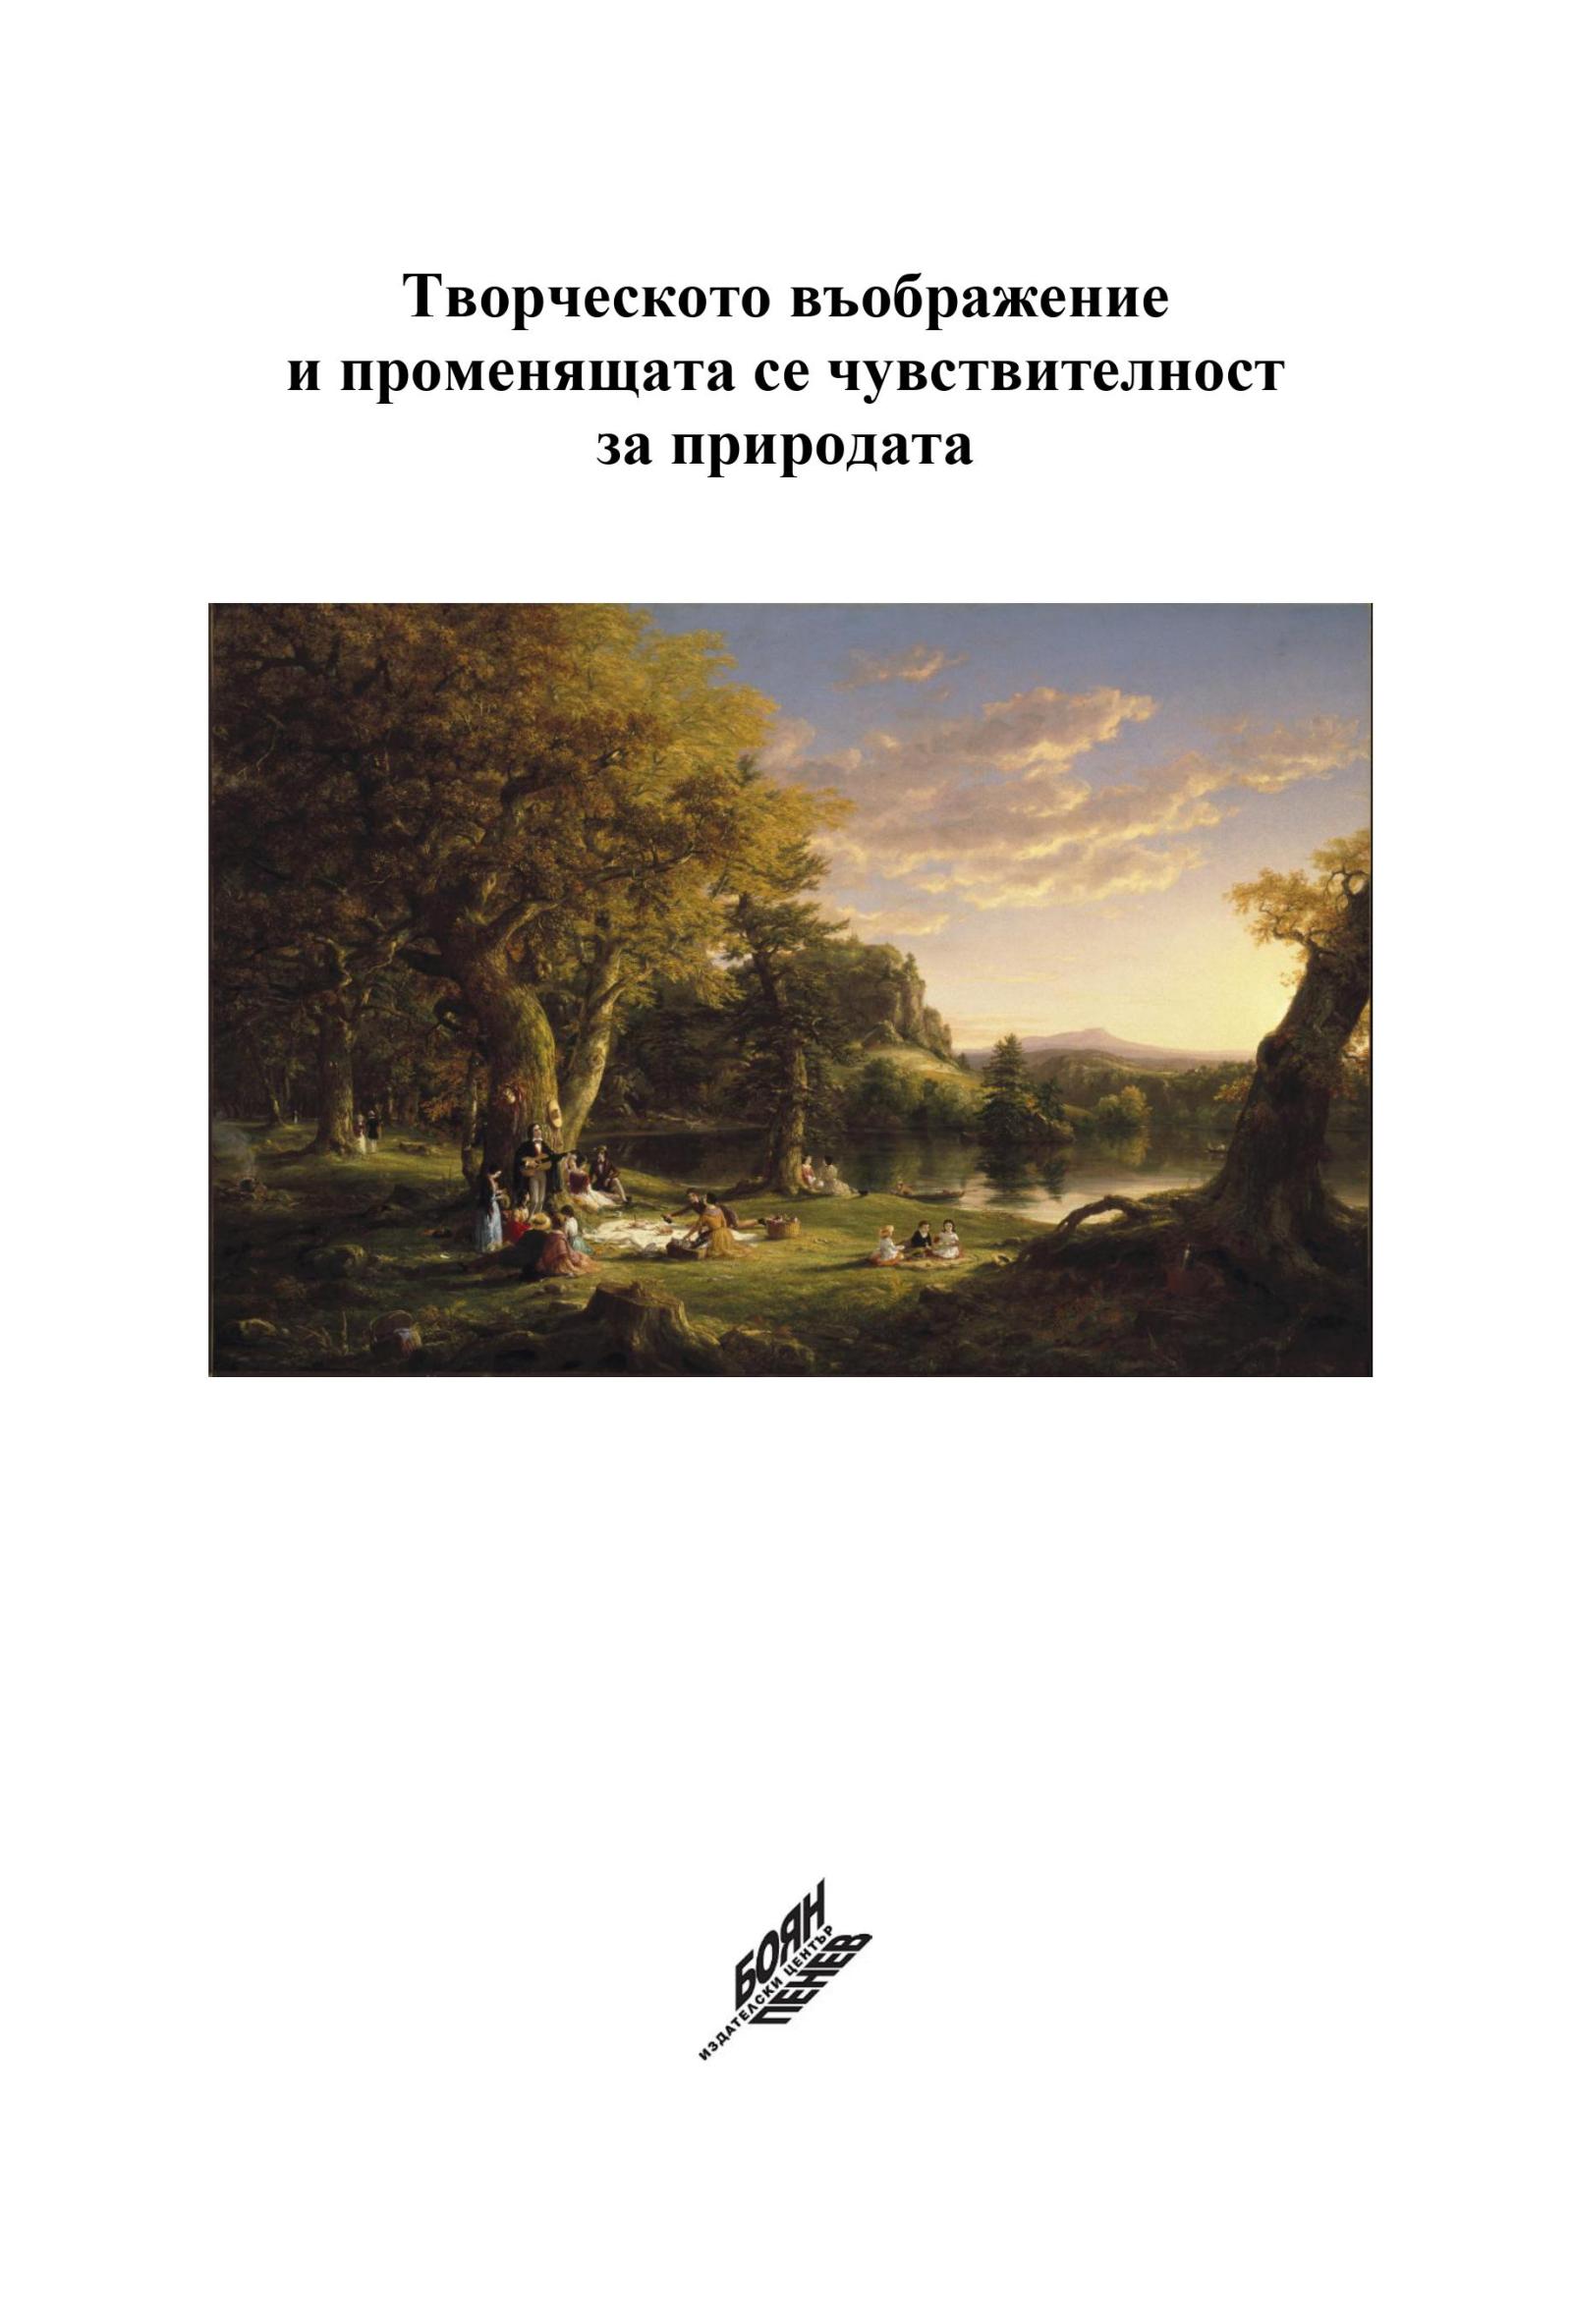 Tvorchesko-vaobrajenie-cover.jpg